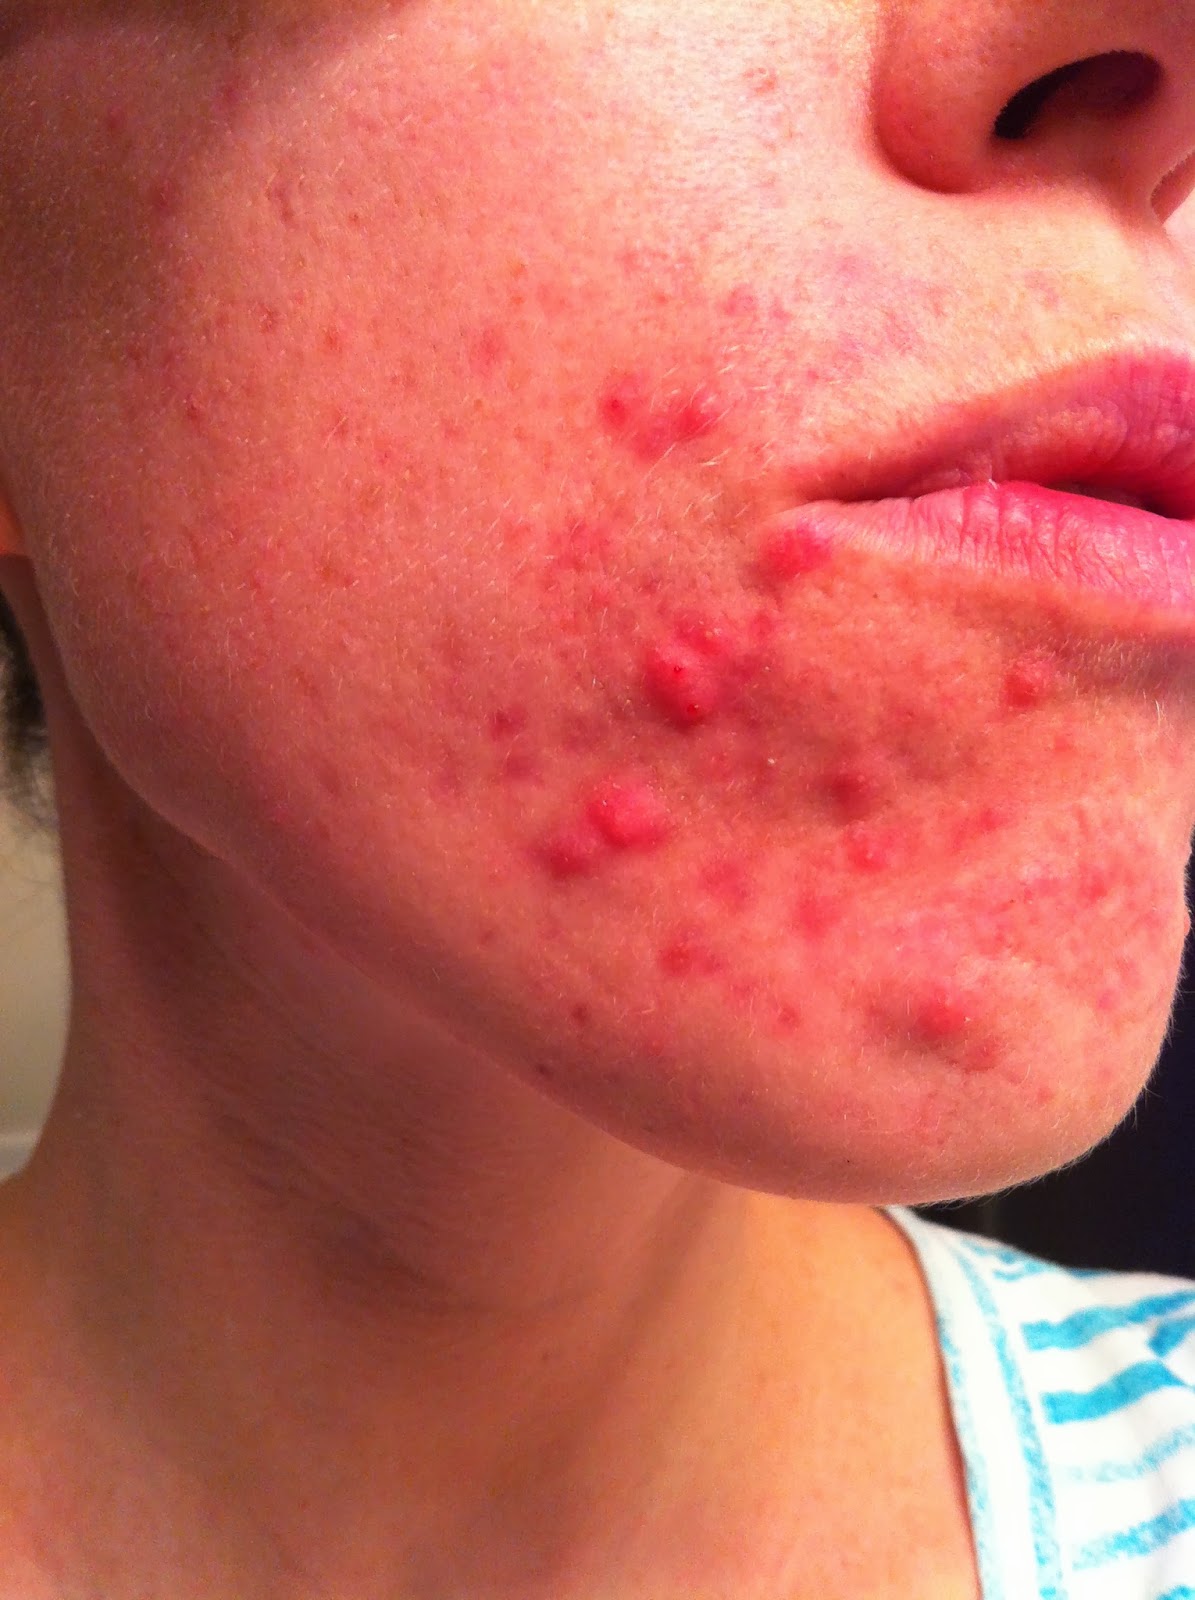 How I Healed the Rash Around My Mouth | Zi Zai Dermatology